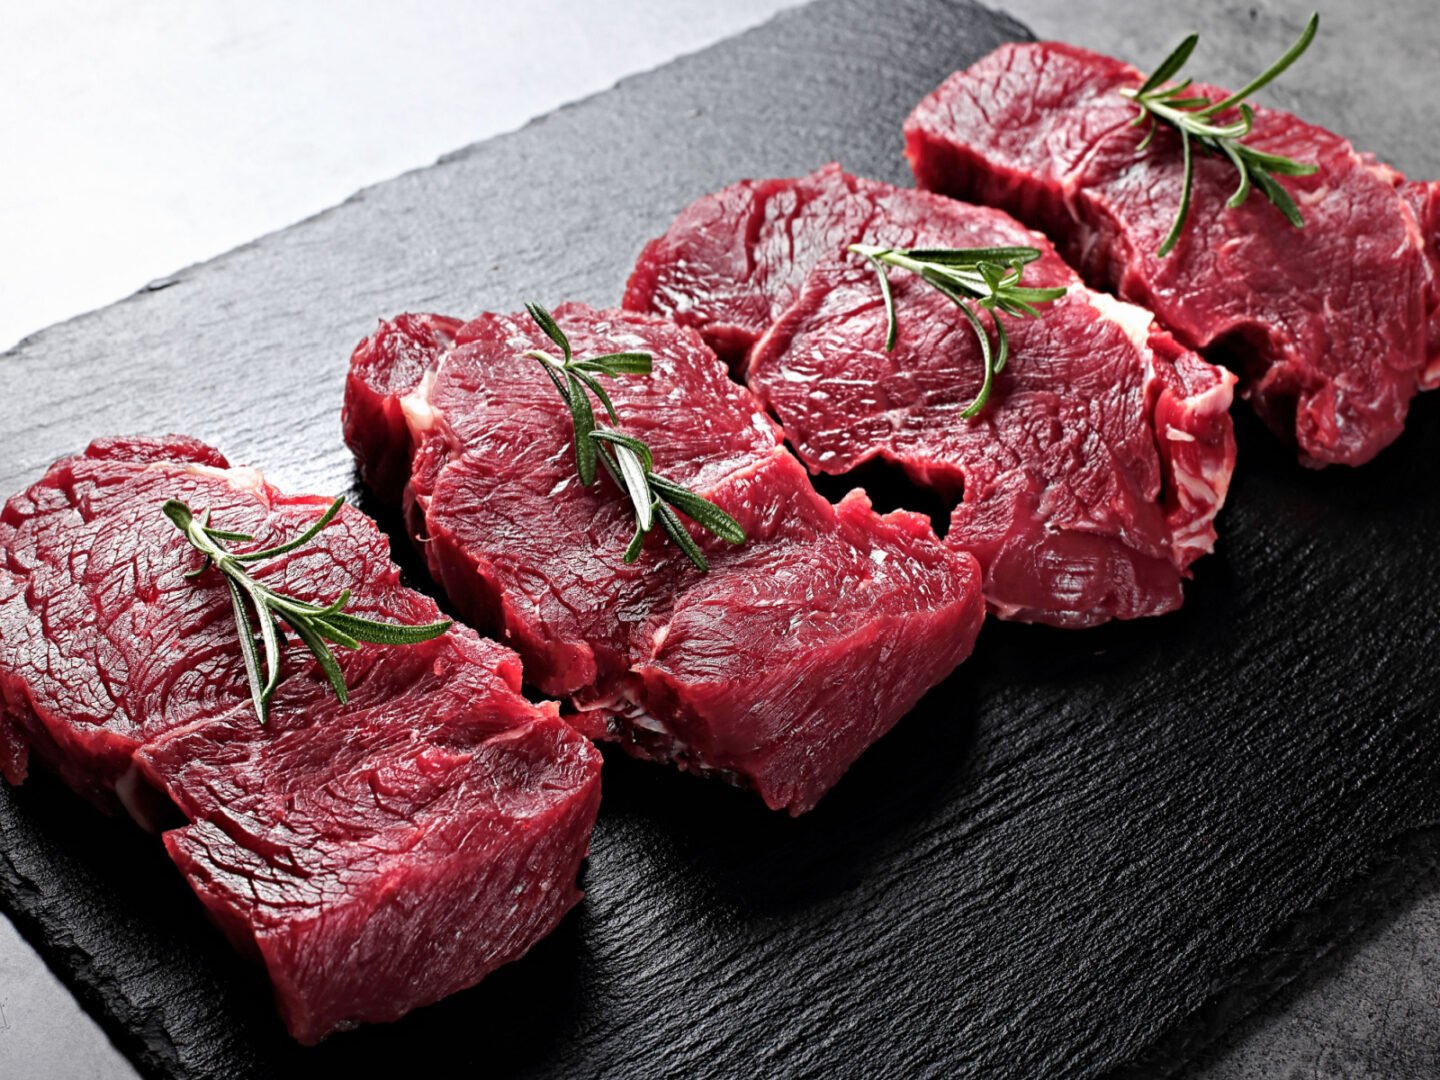 raw sirloin beef steak